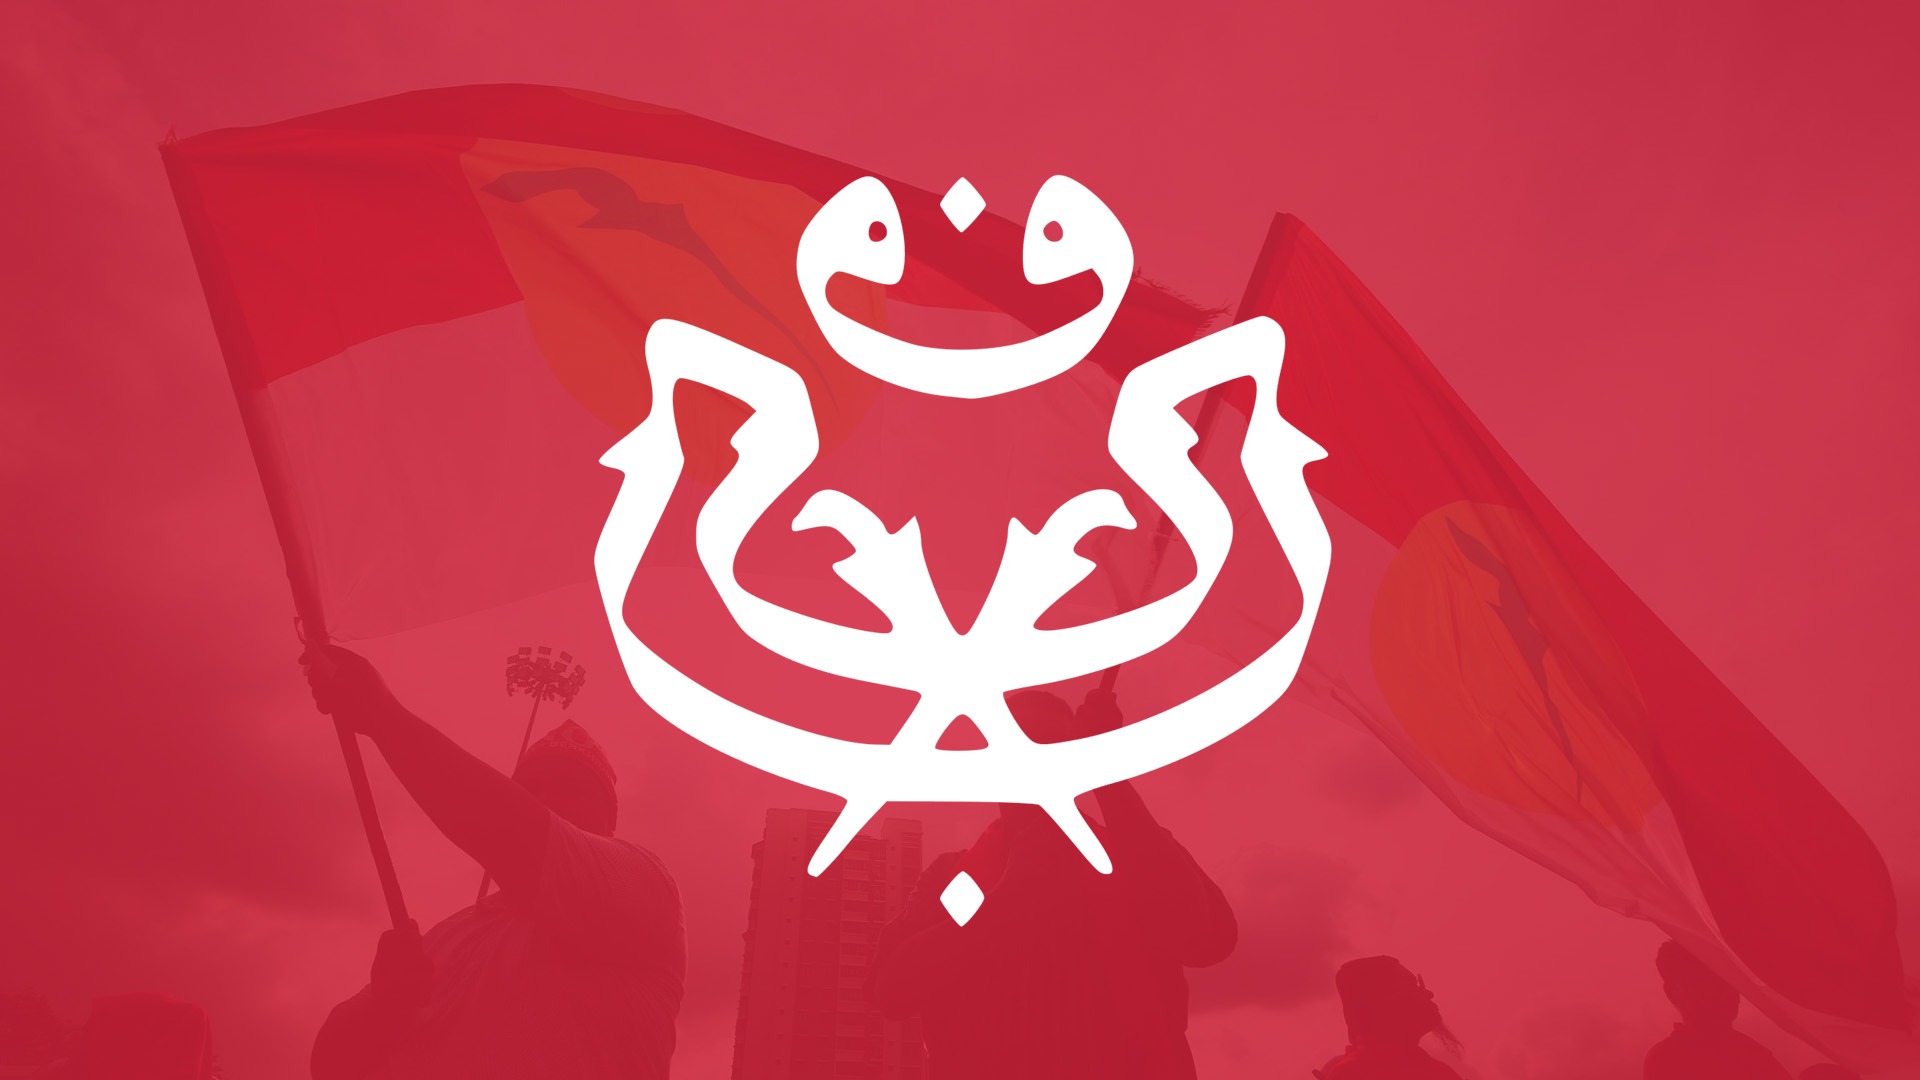 UMNO - United Malays National Organization